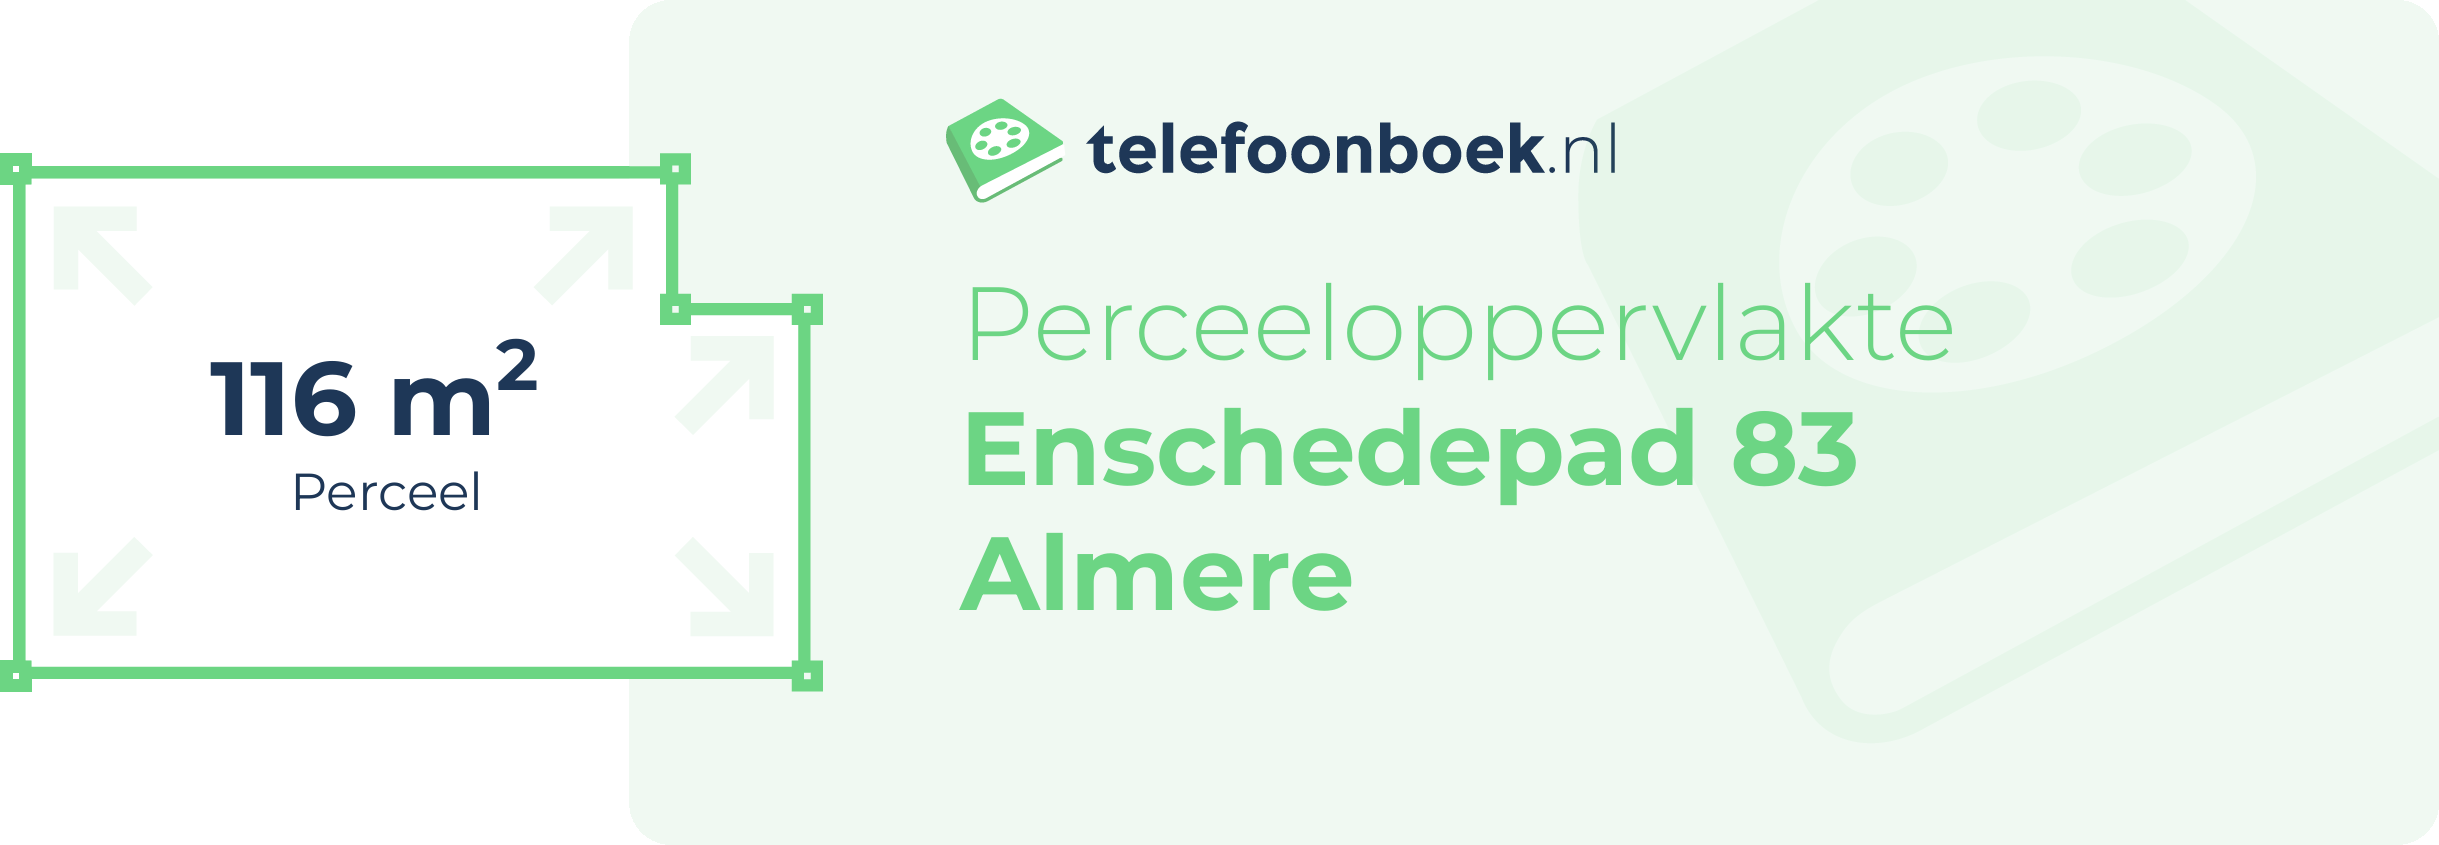 Perceeloppervlakte Enschedepad 83 Almere